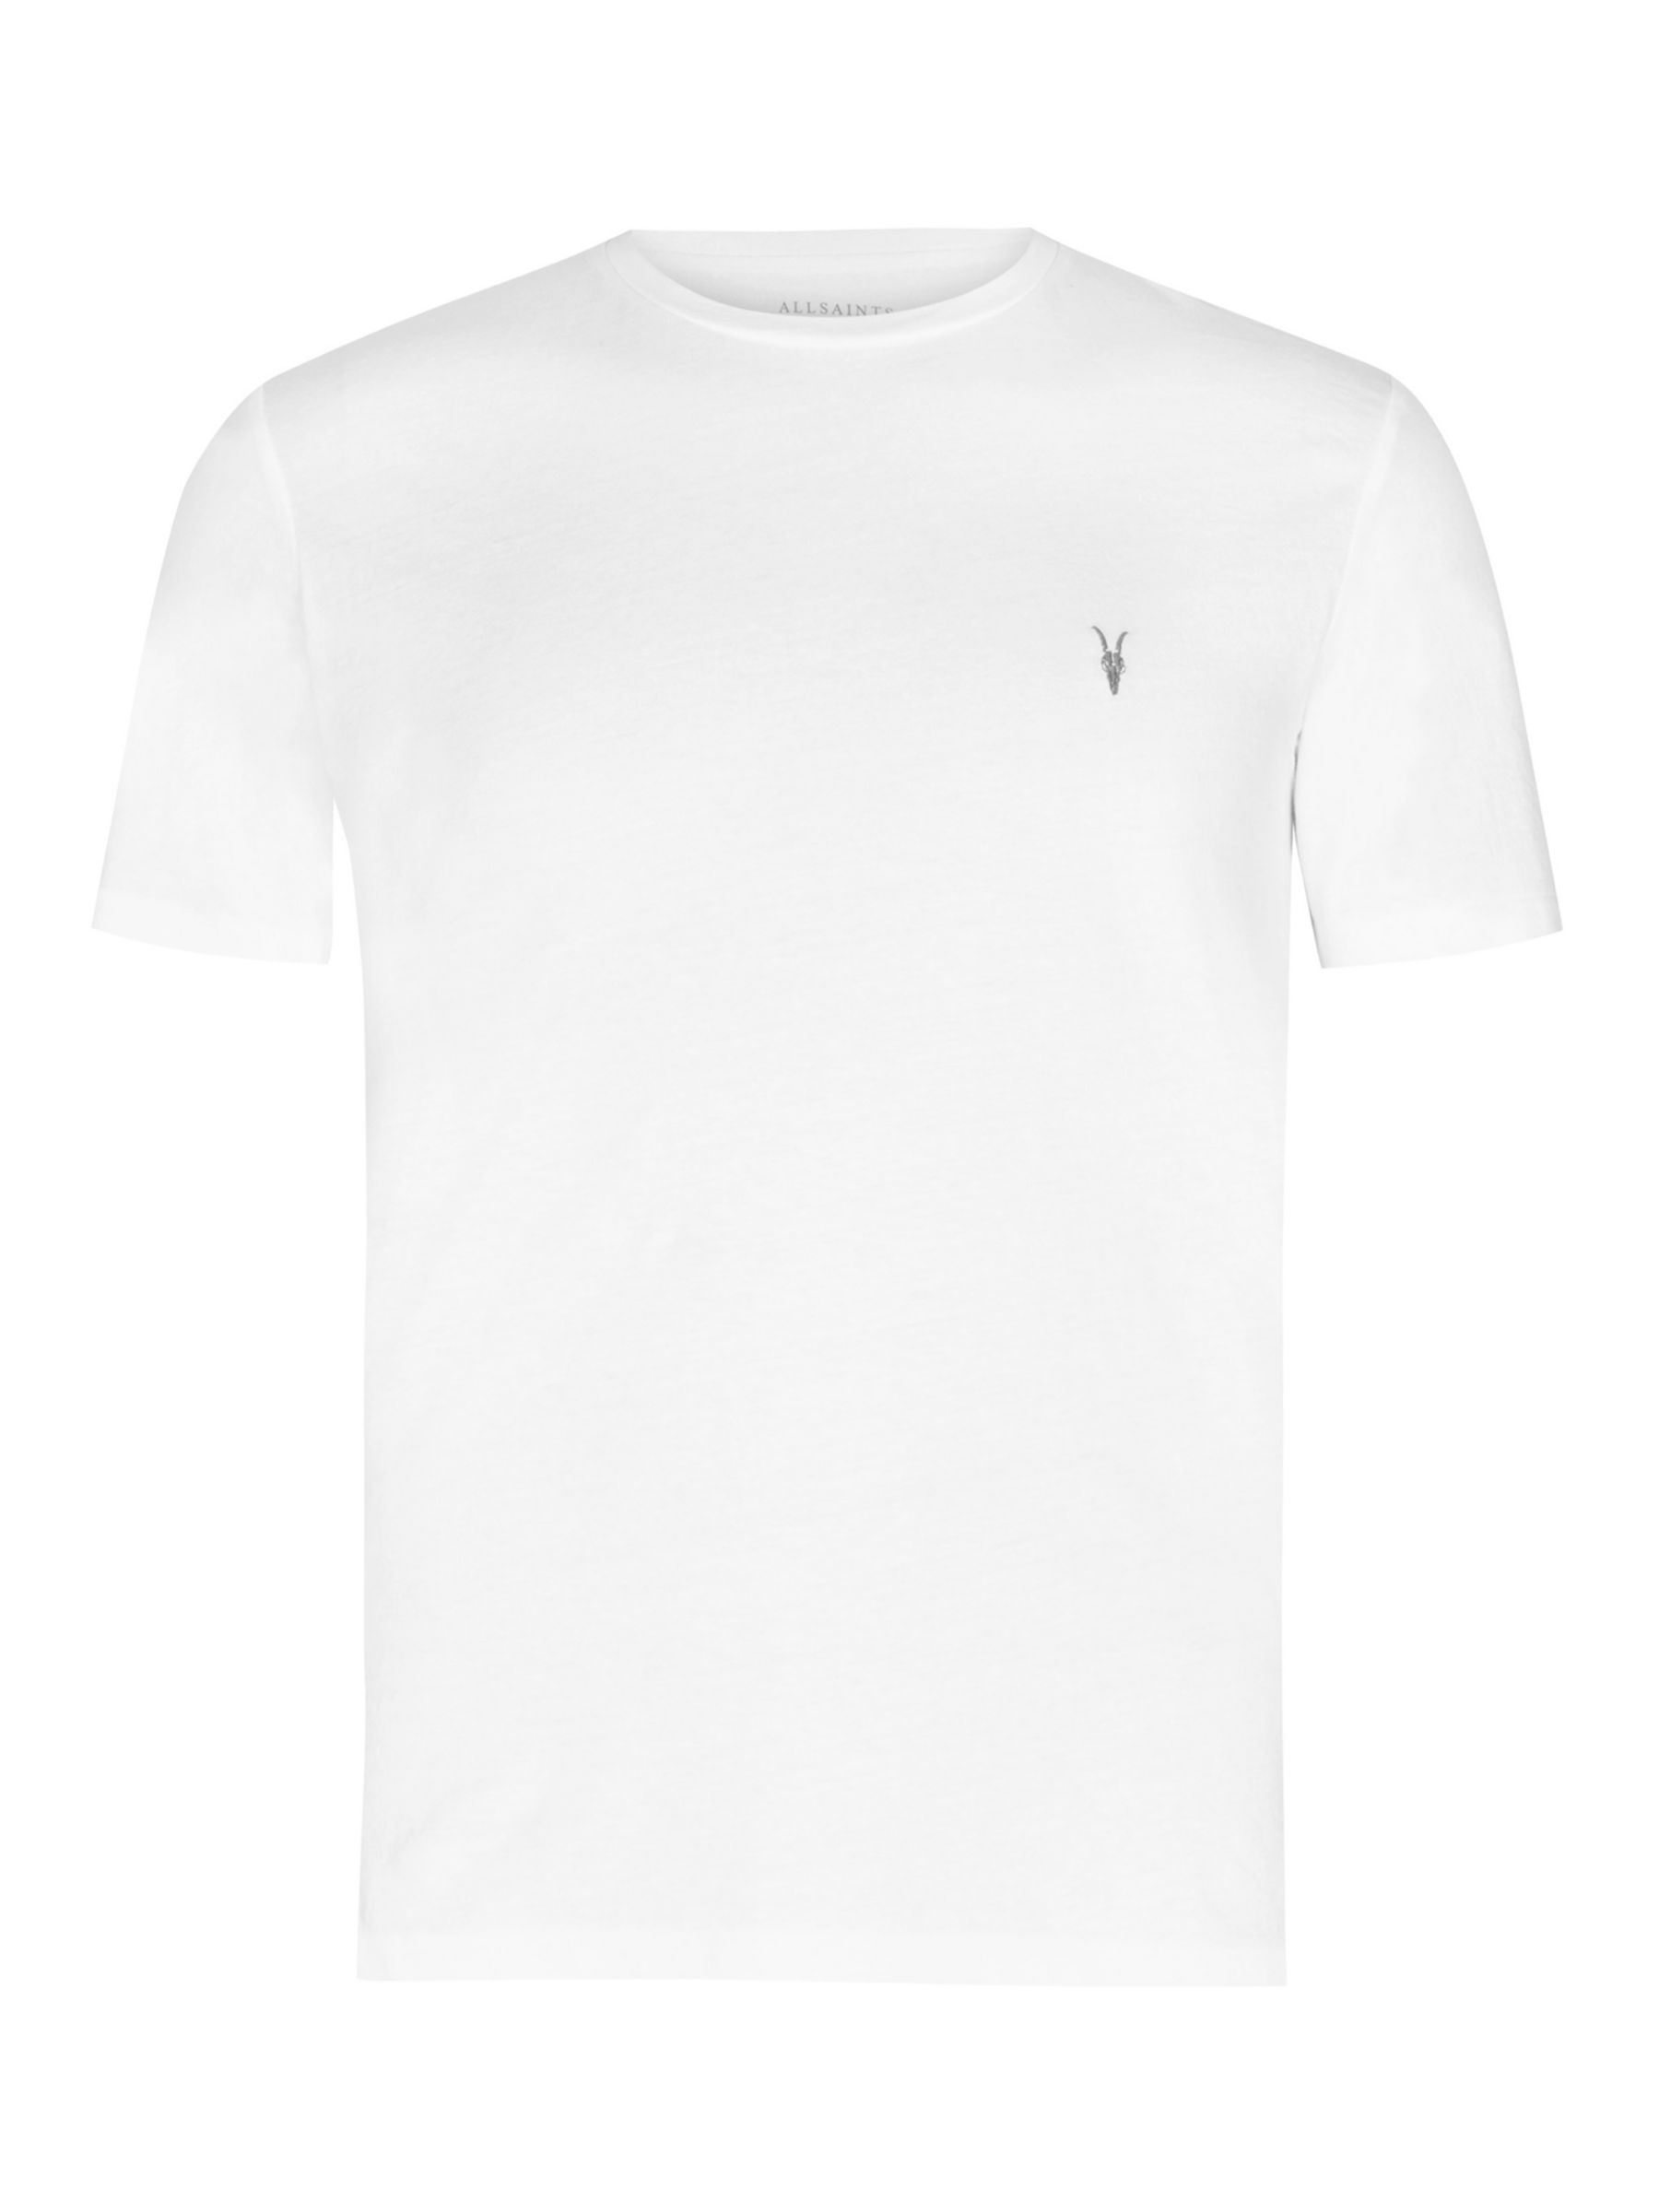 AllSaints Tonic Crew Neck T-Shirt, Optic White, XS